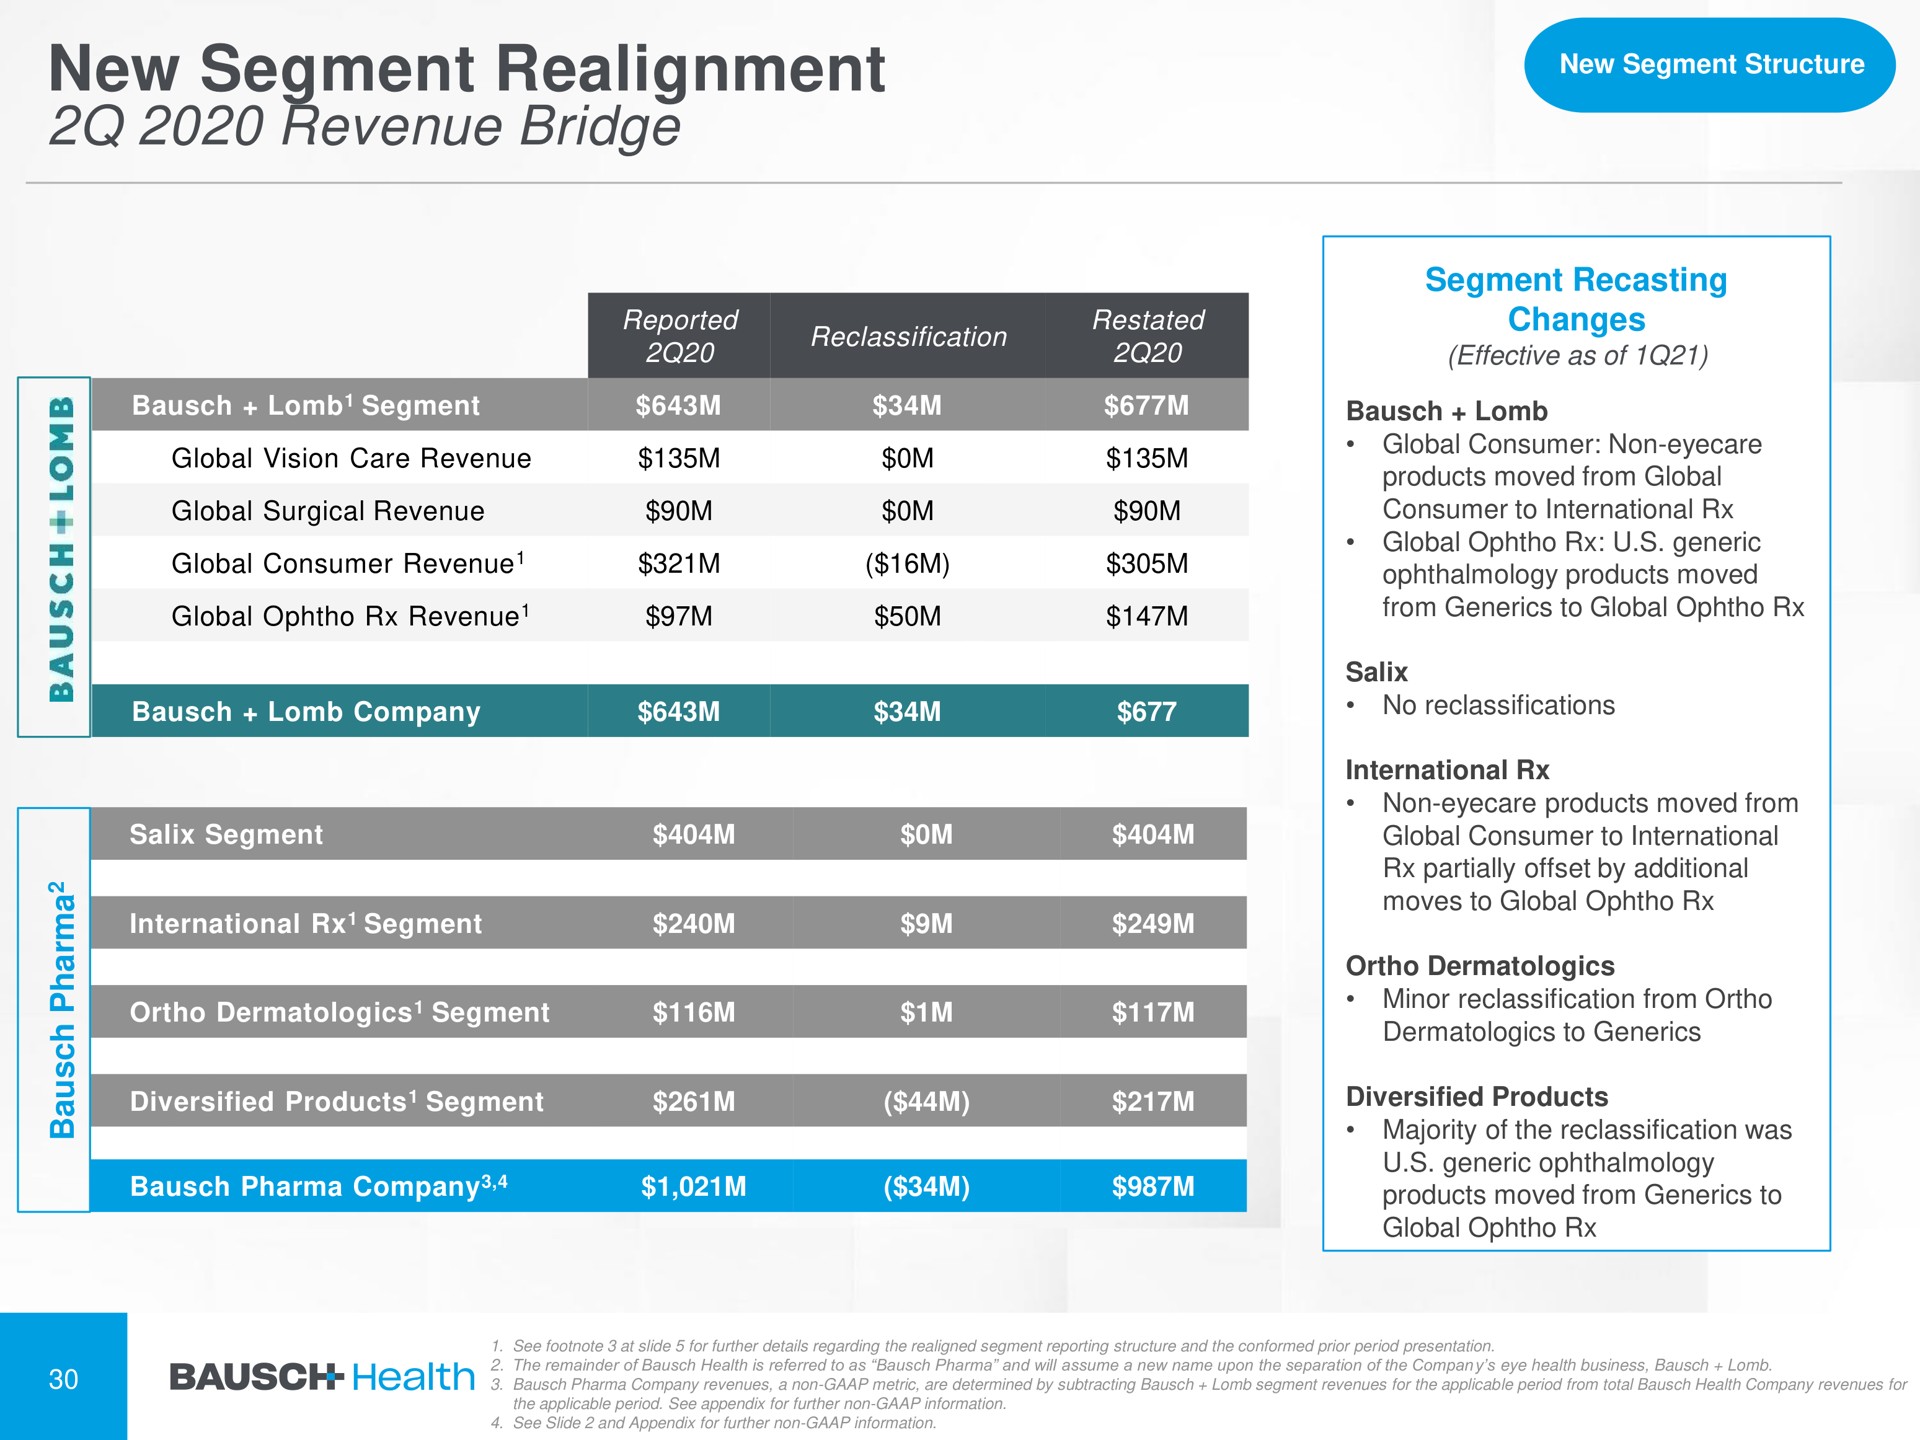 new segment realignment revenue bridge | Bausch Health Companies